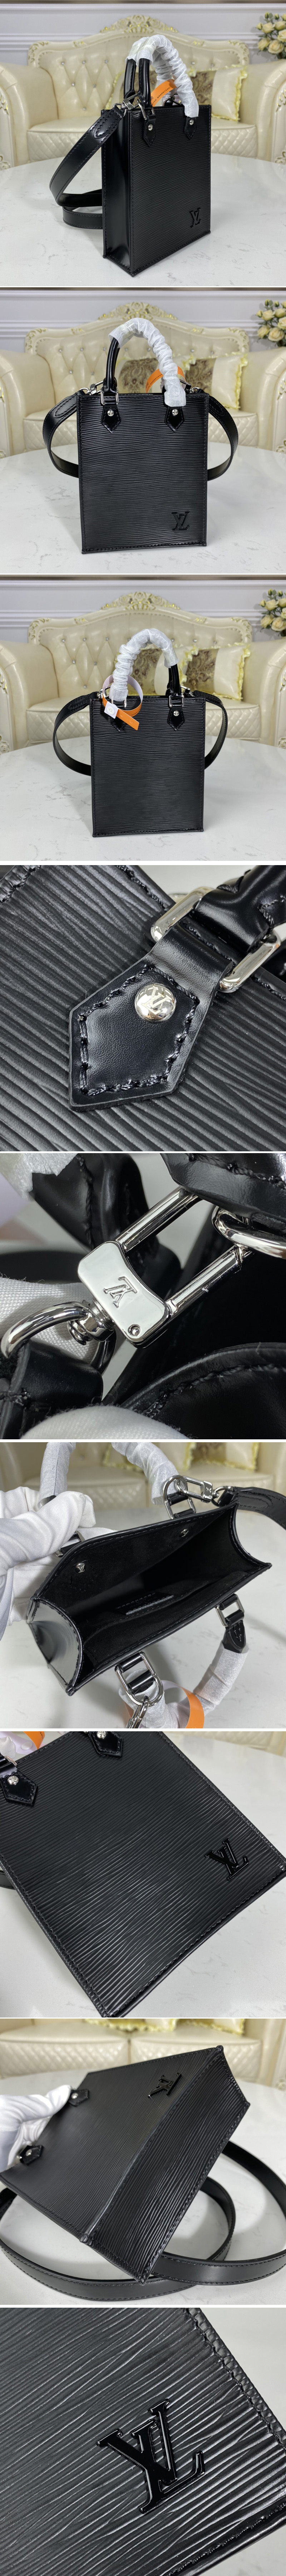 Replica Louis Vuitton M69441 LV Petit Sac Plat bag in Black Epi leather